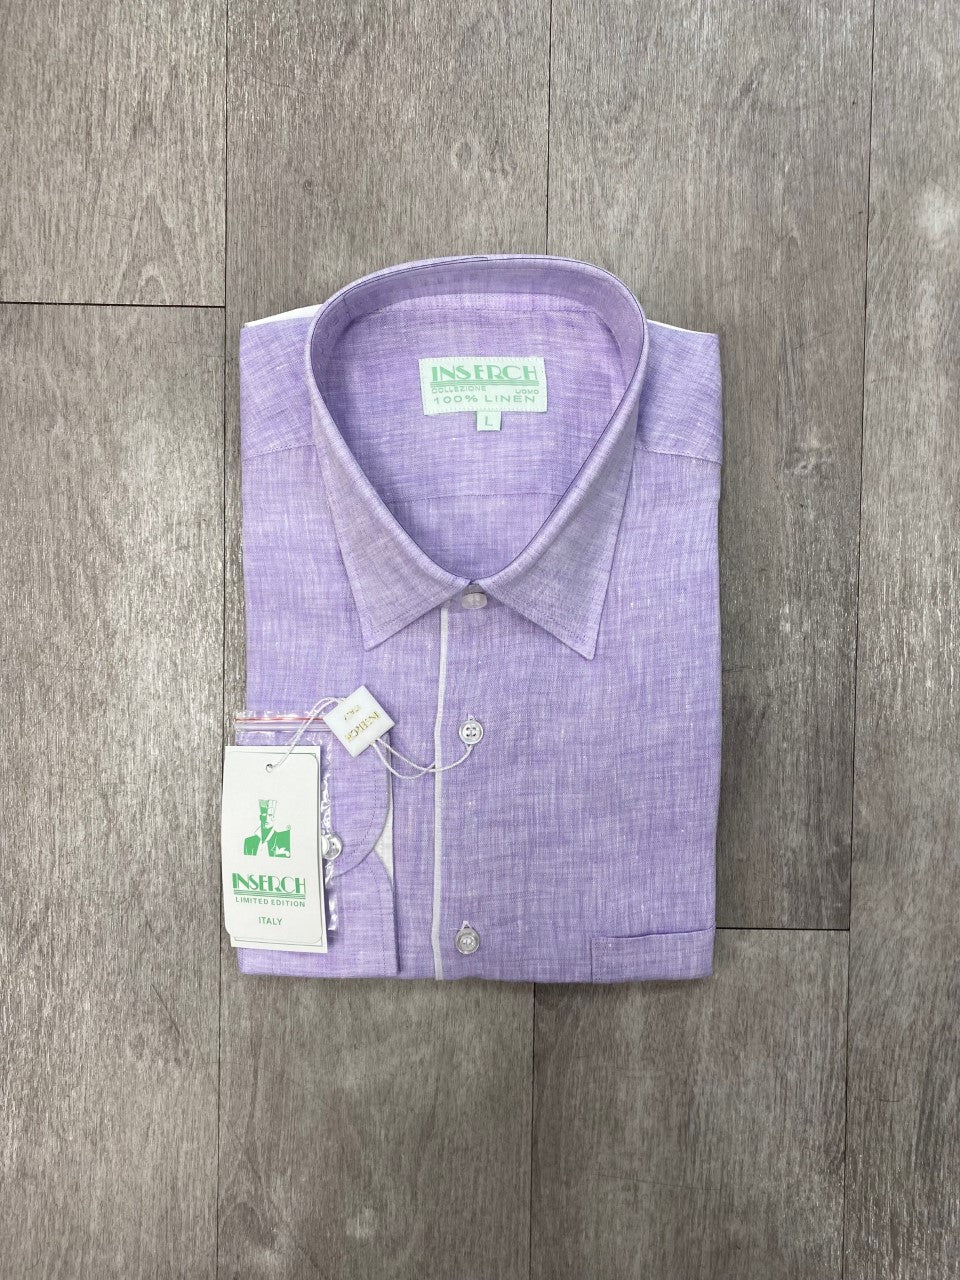 Inserch Premium Linen Yarn-Dye Solid Long Sleeve Shirt 24116-119 Lavender